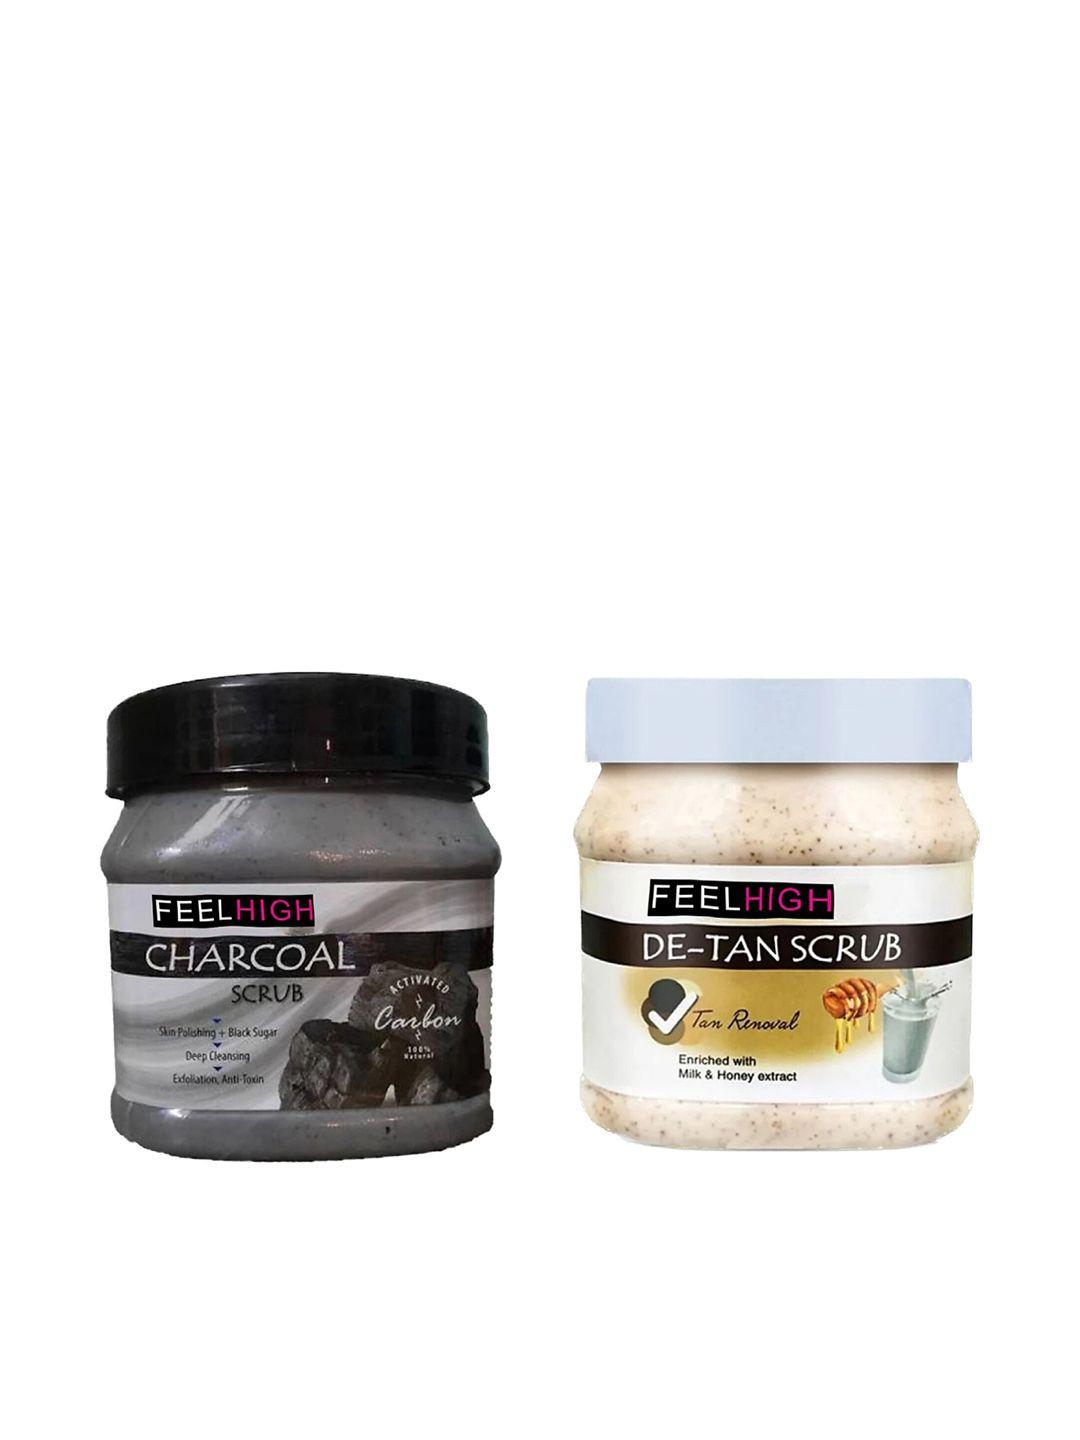 feelhigh set of 2 de tan scrub & charcoal scrub for face & body exfoliators 500 ml each